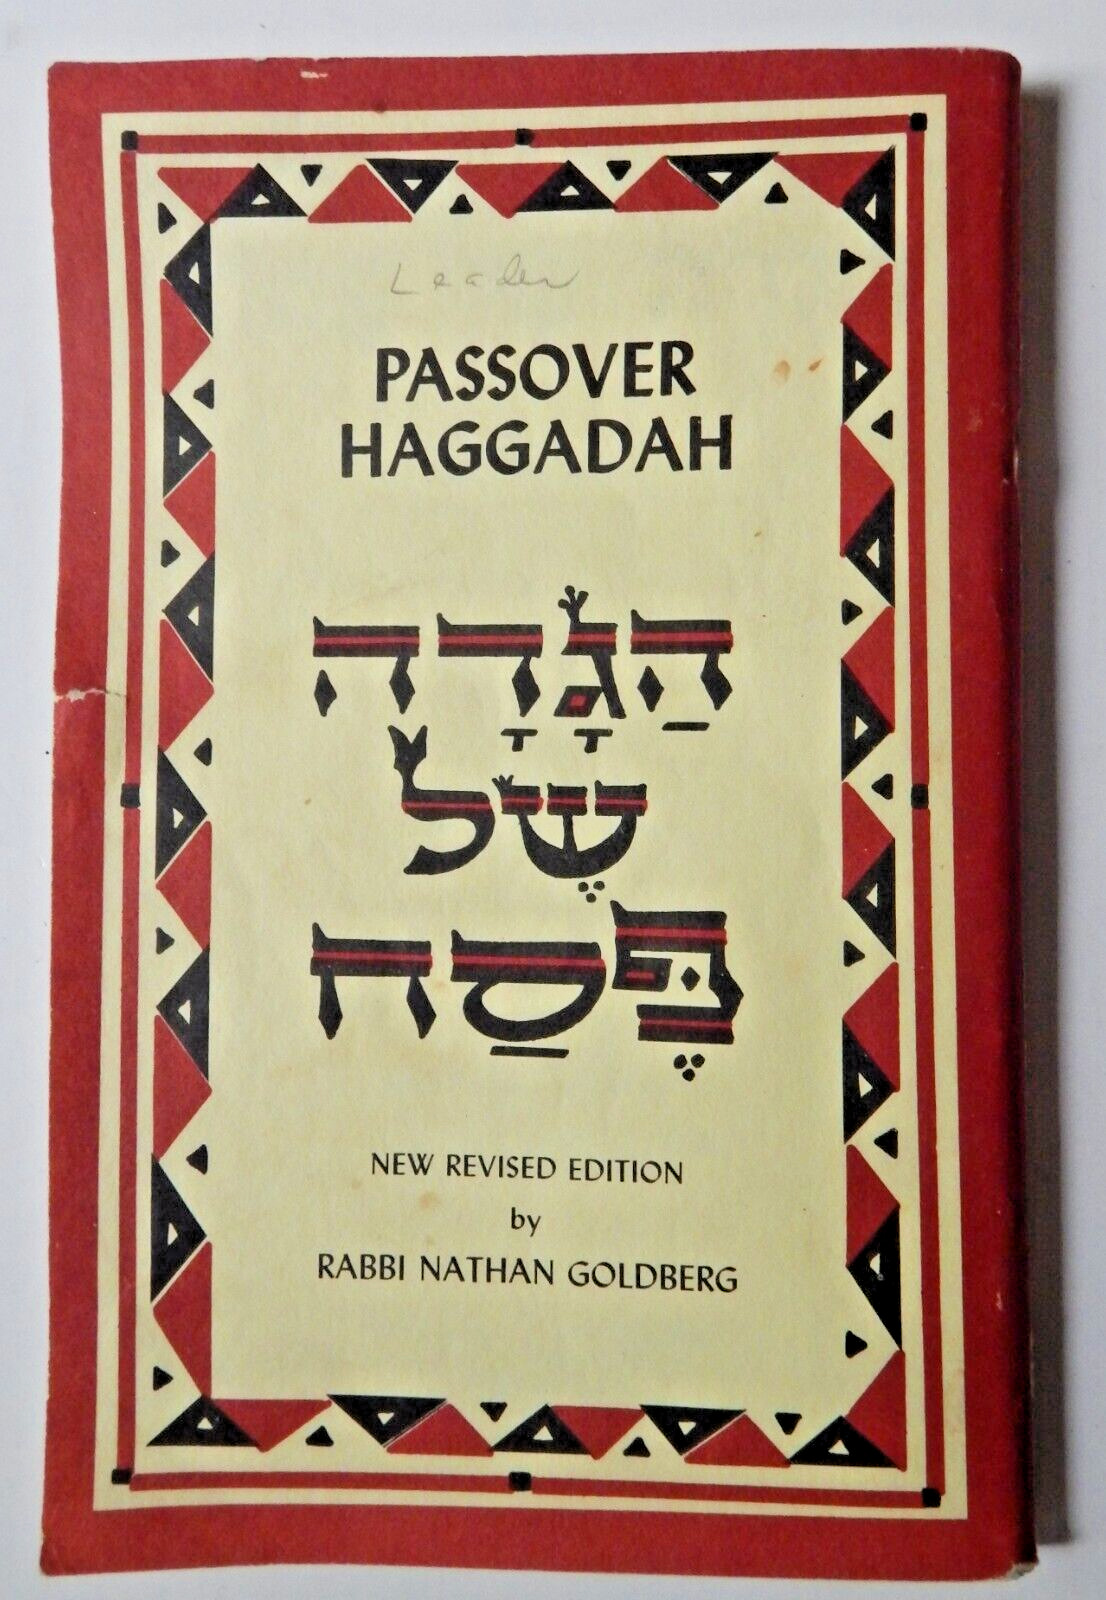 Passover Haggadah Seder New Rev Ed Rabbi Goldberg 1966 Hebrew English Smaller